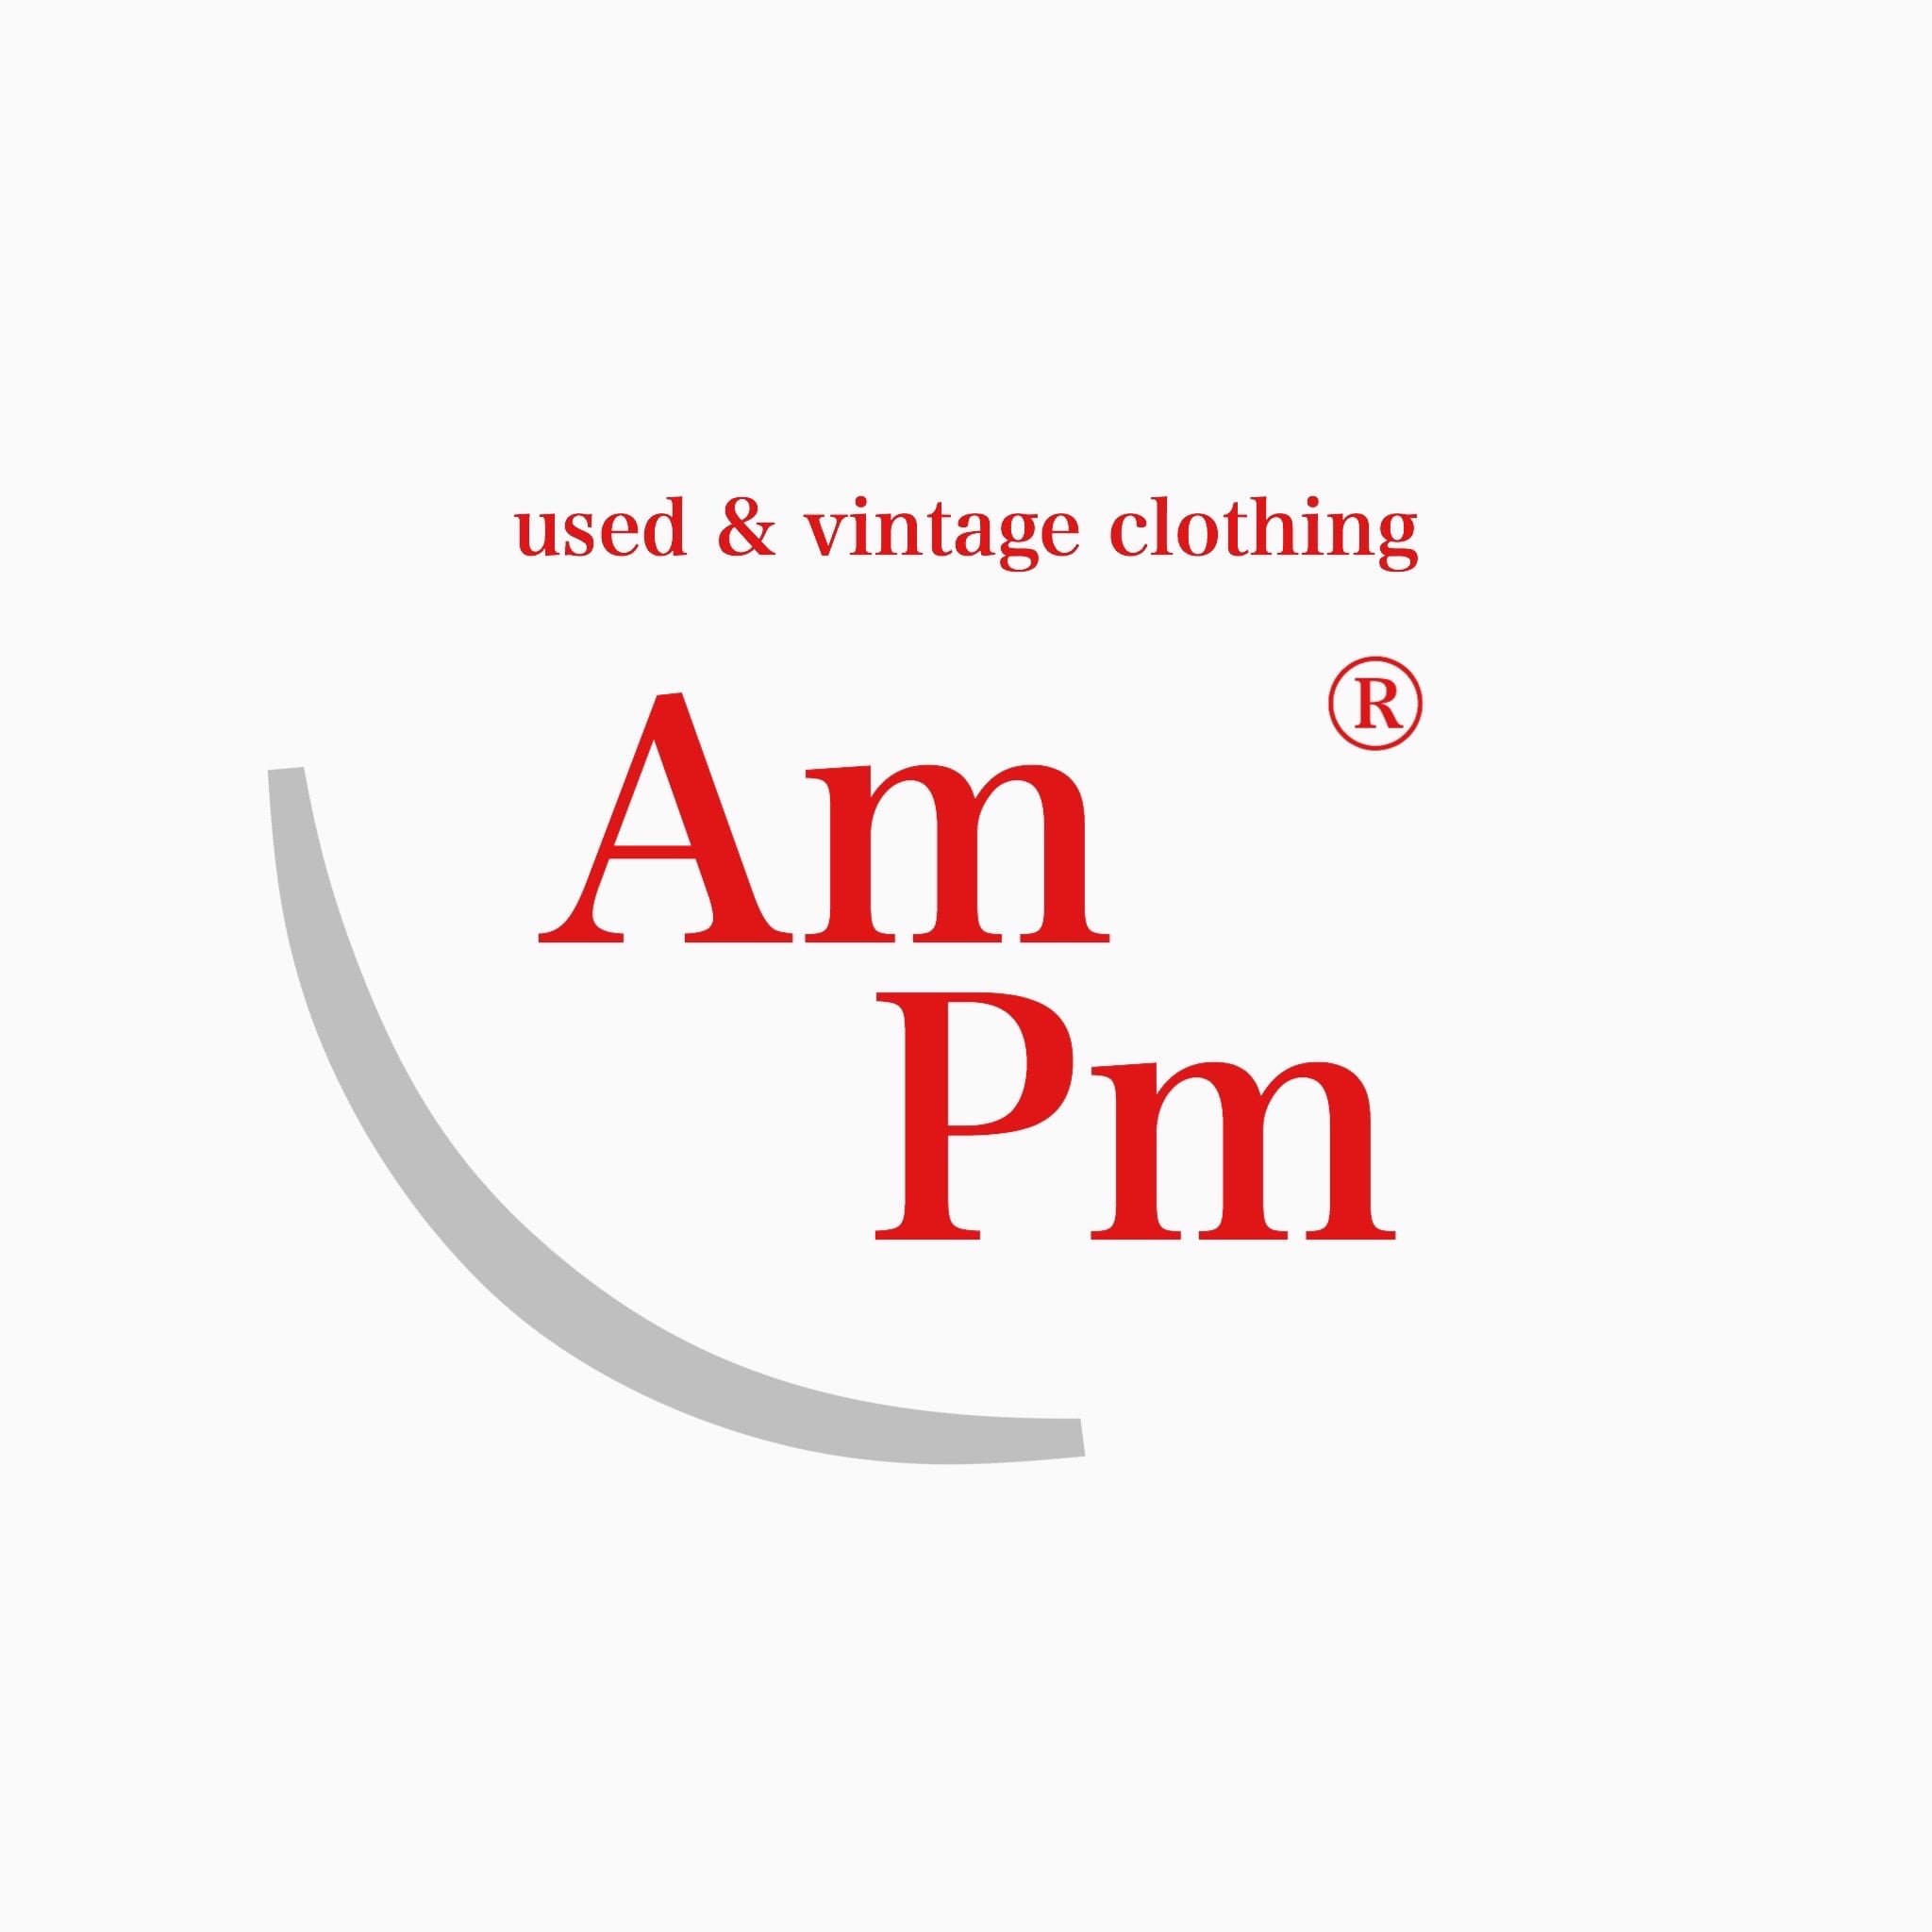 AmPm used & vintage clothing